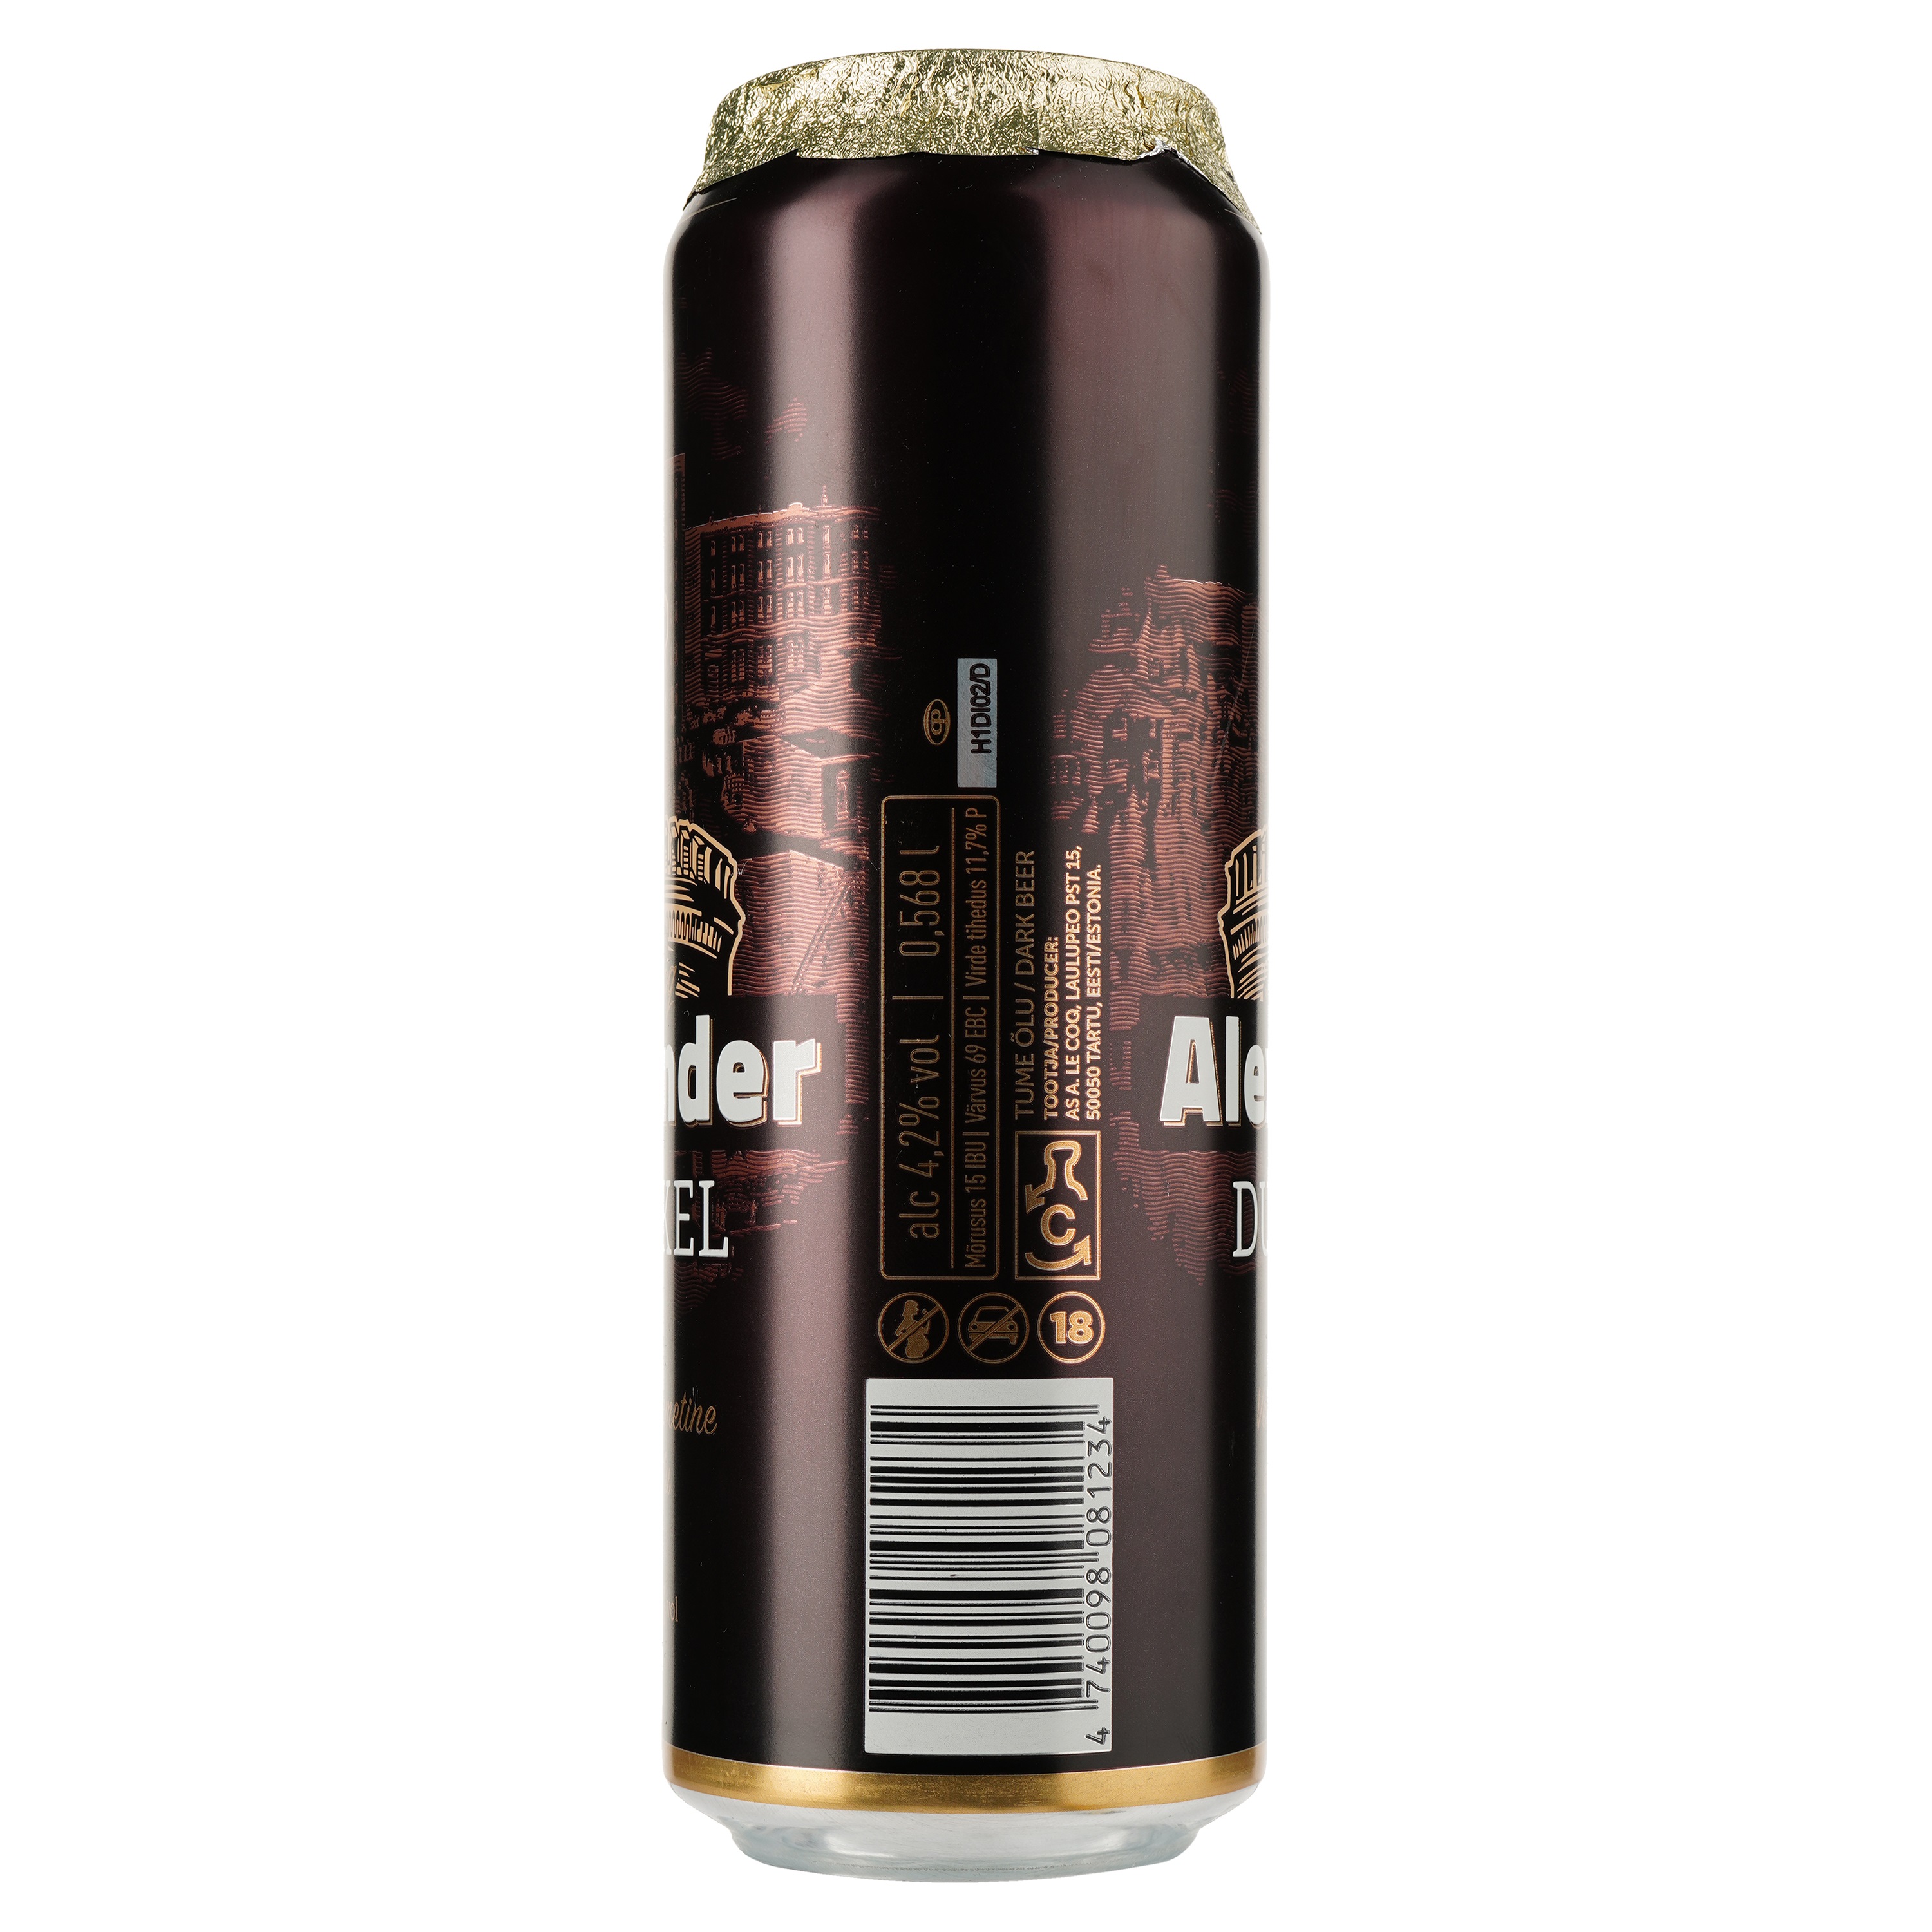 Пиво A. Le Coq Alexander Dunkel, темне, фільтроване, 4,2%, з/б, 0,568 л - фото 2